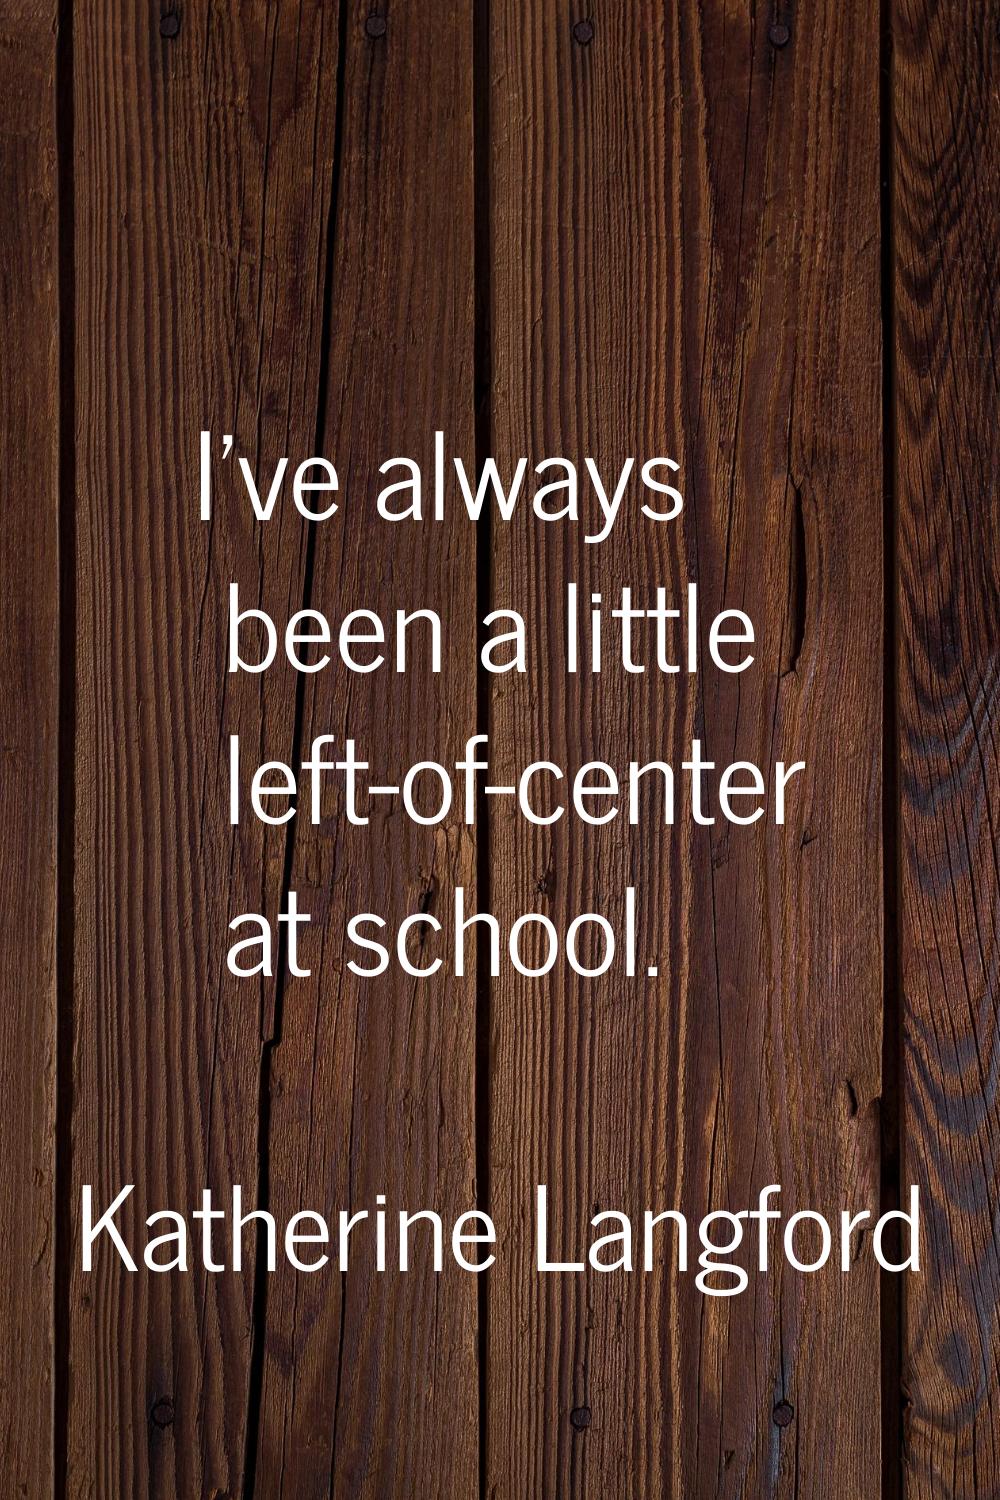 I've always been a little left-of-center at school.